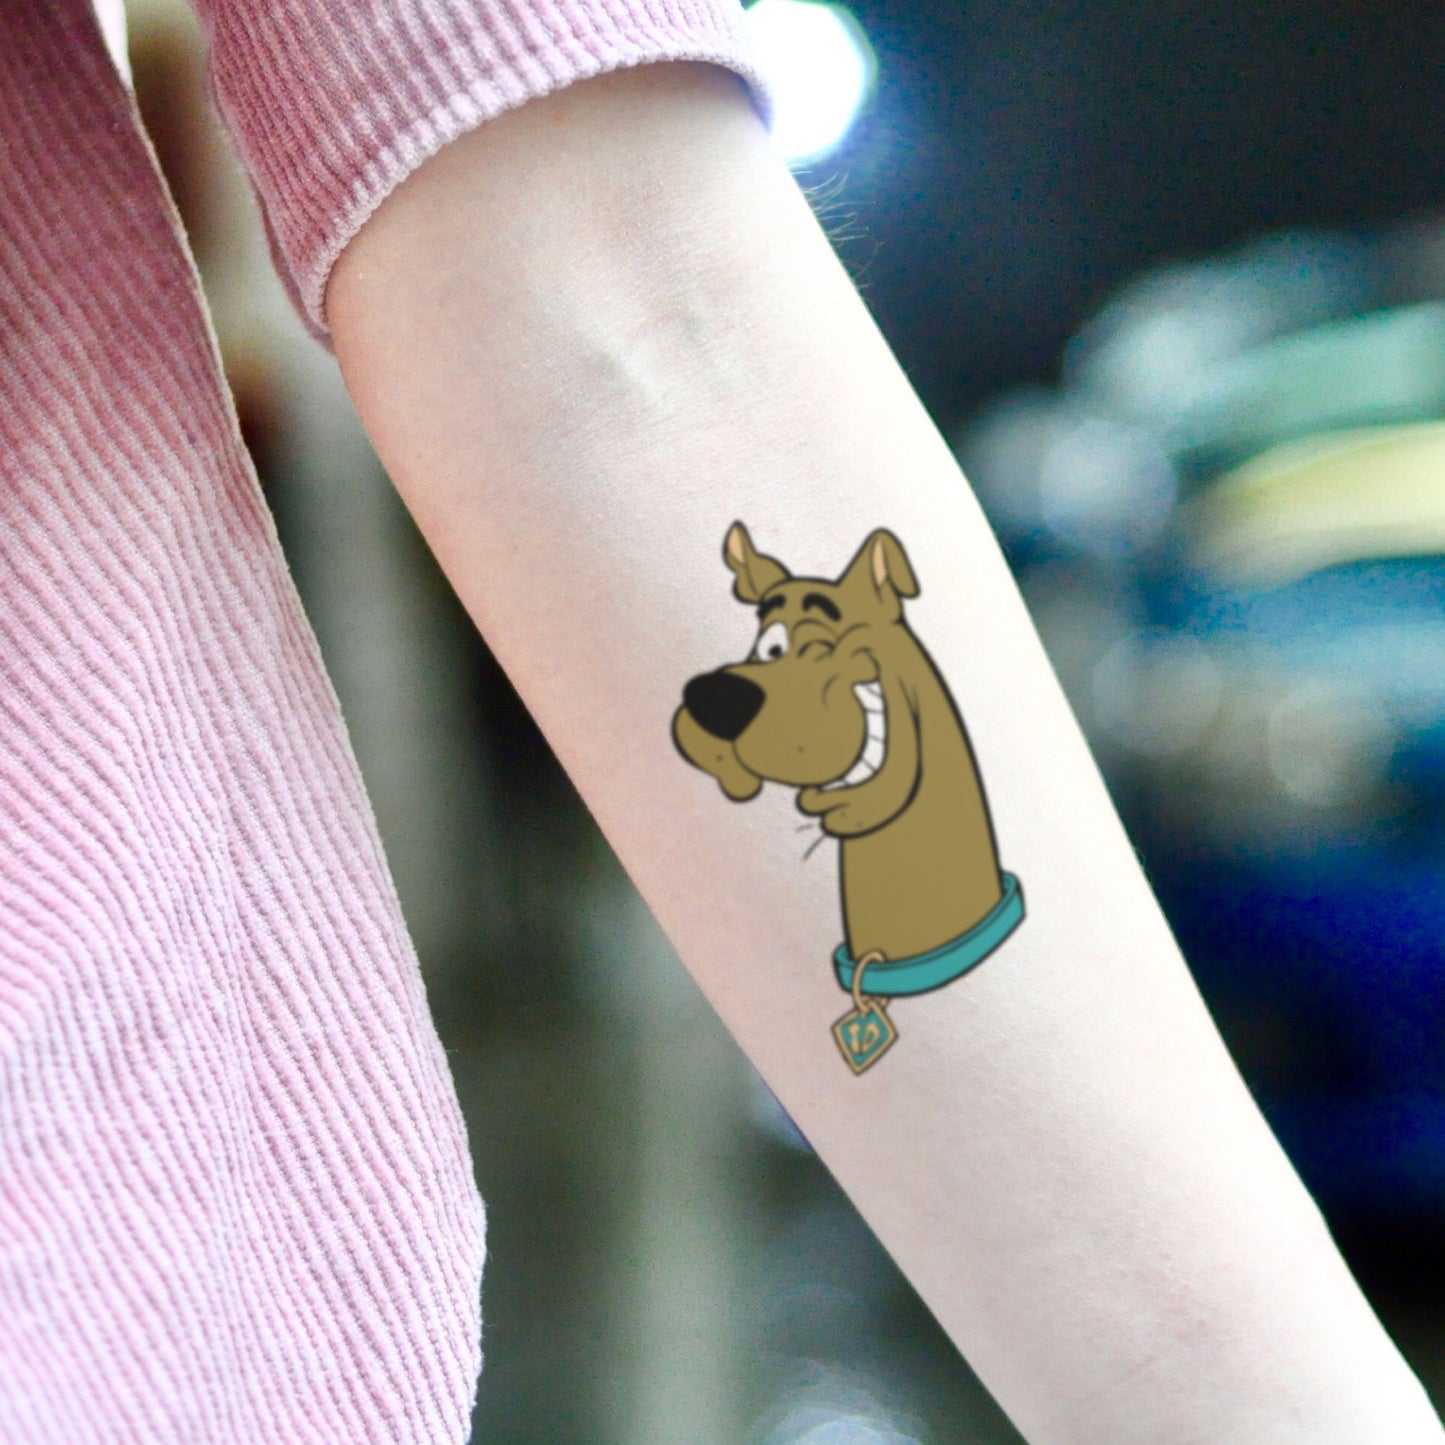 fake small scooby doo cartoon temporary tattoo sticker design idea on inner arm